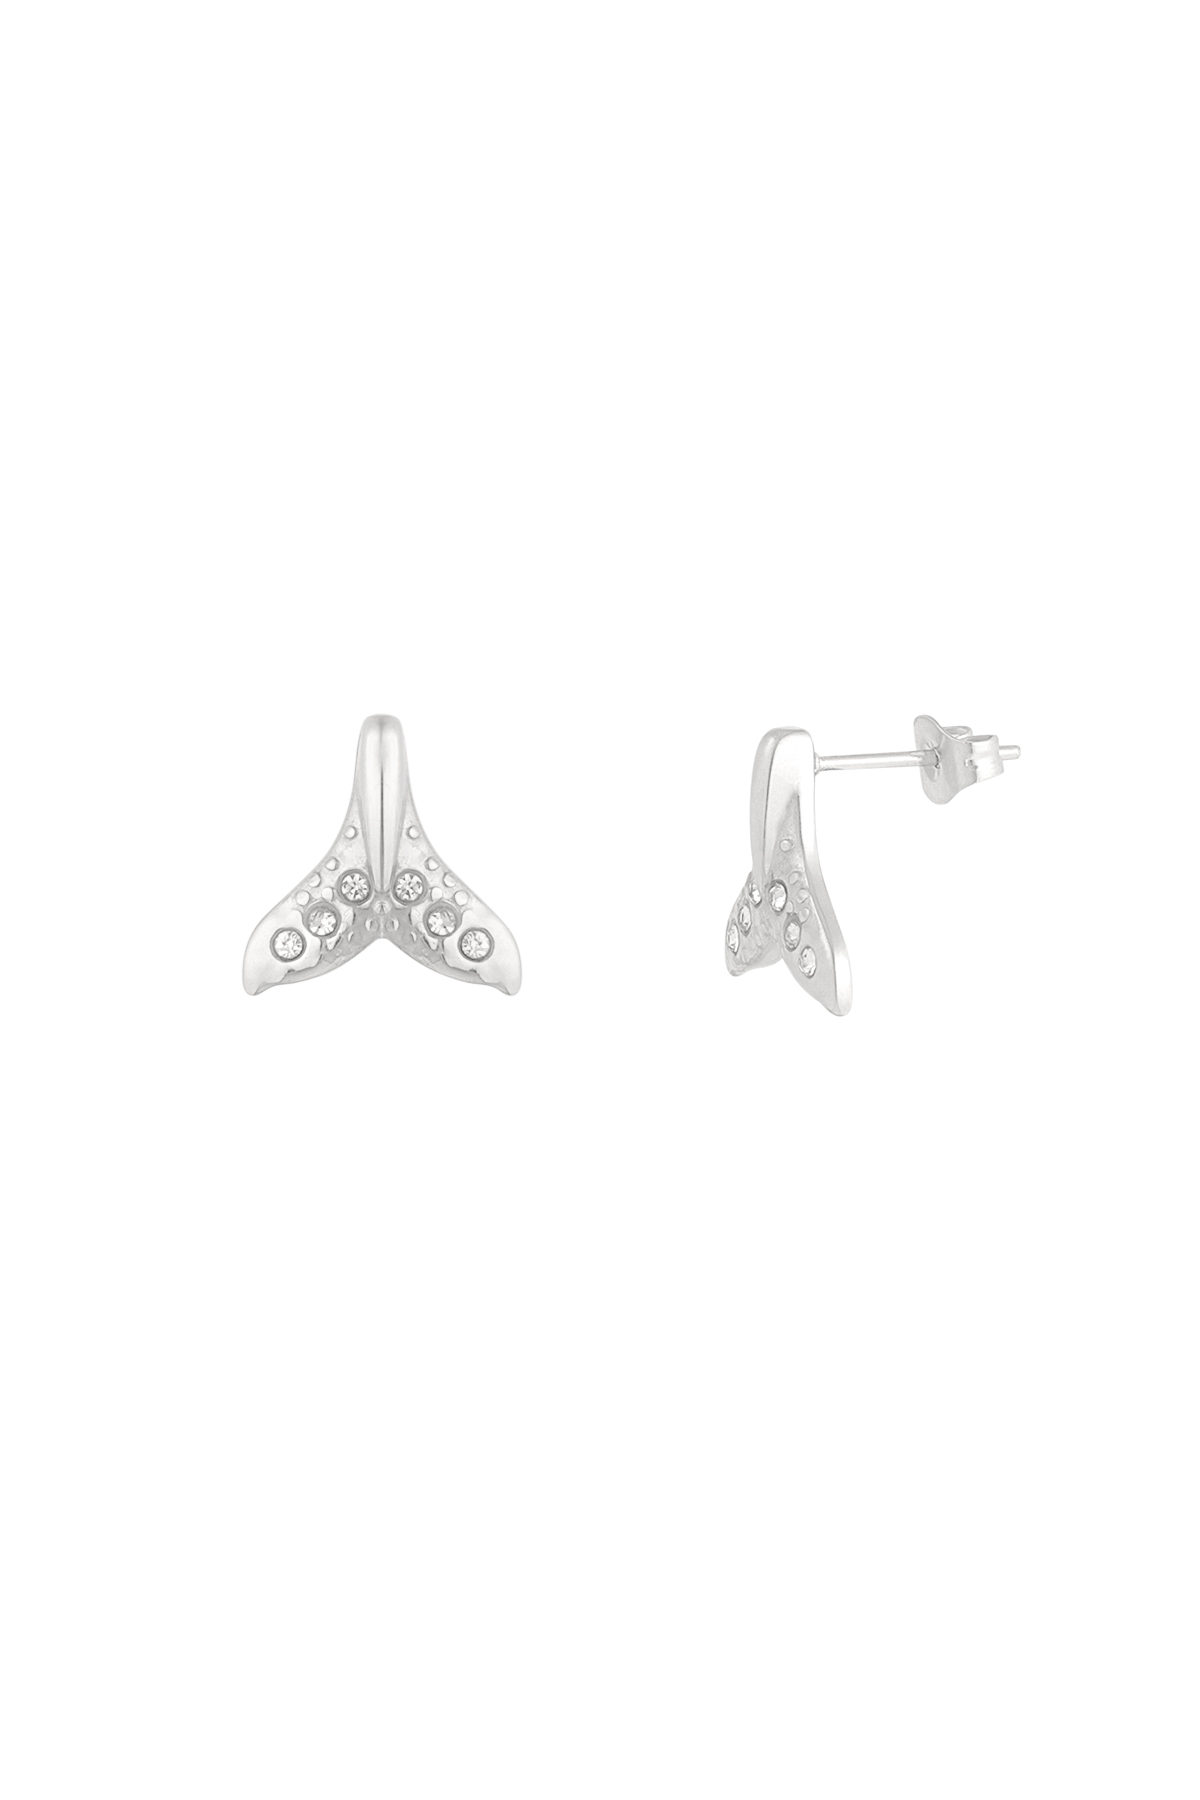 Earrings whale tail - silver